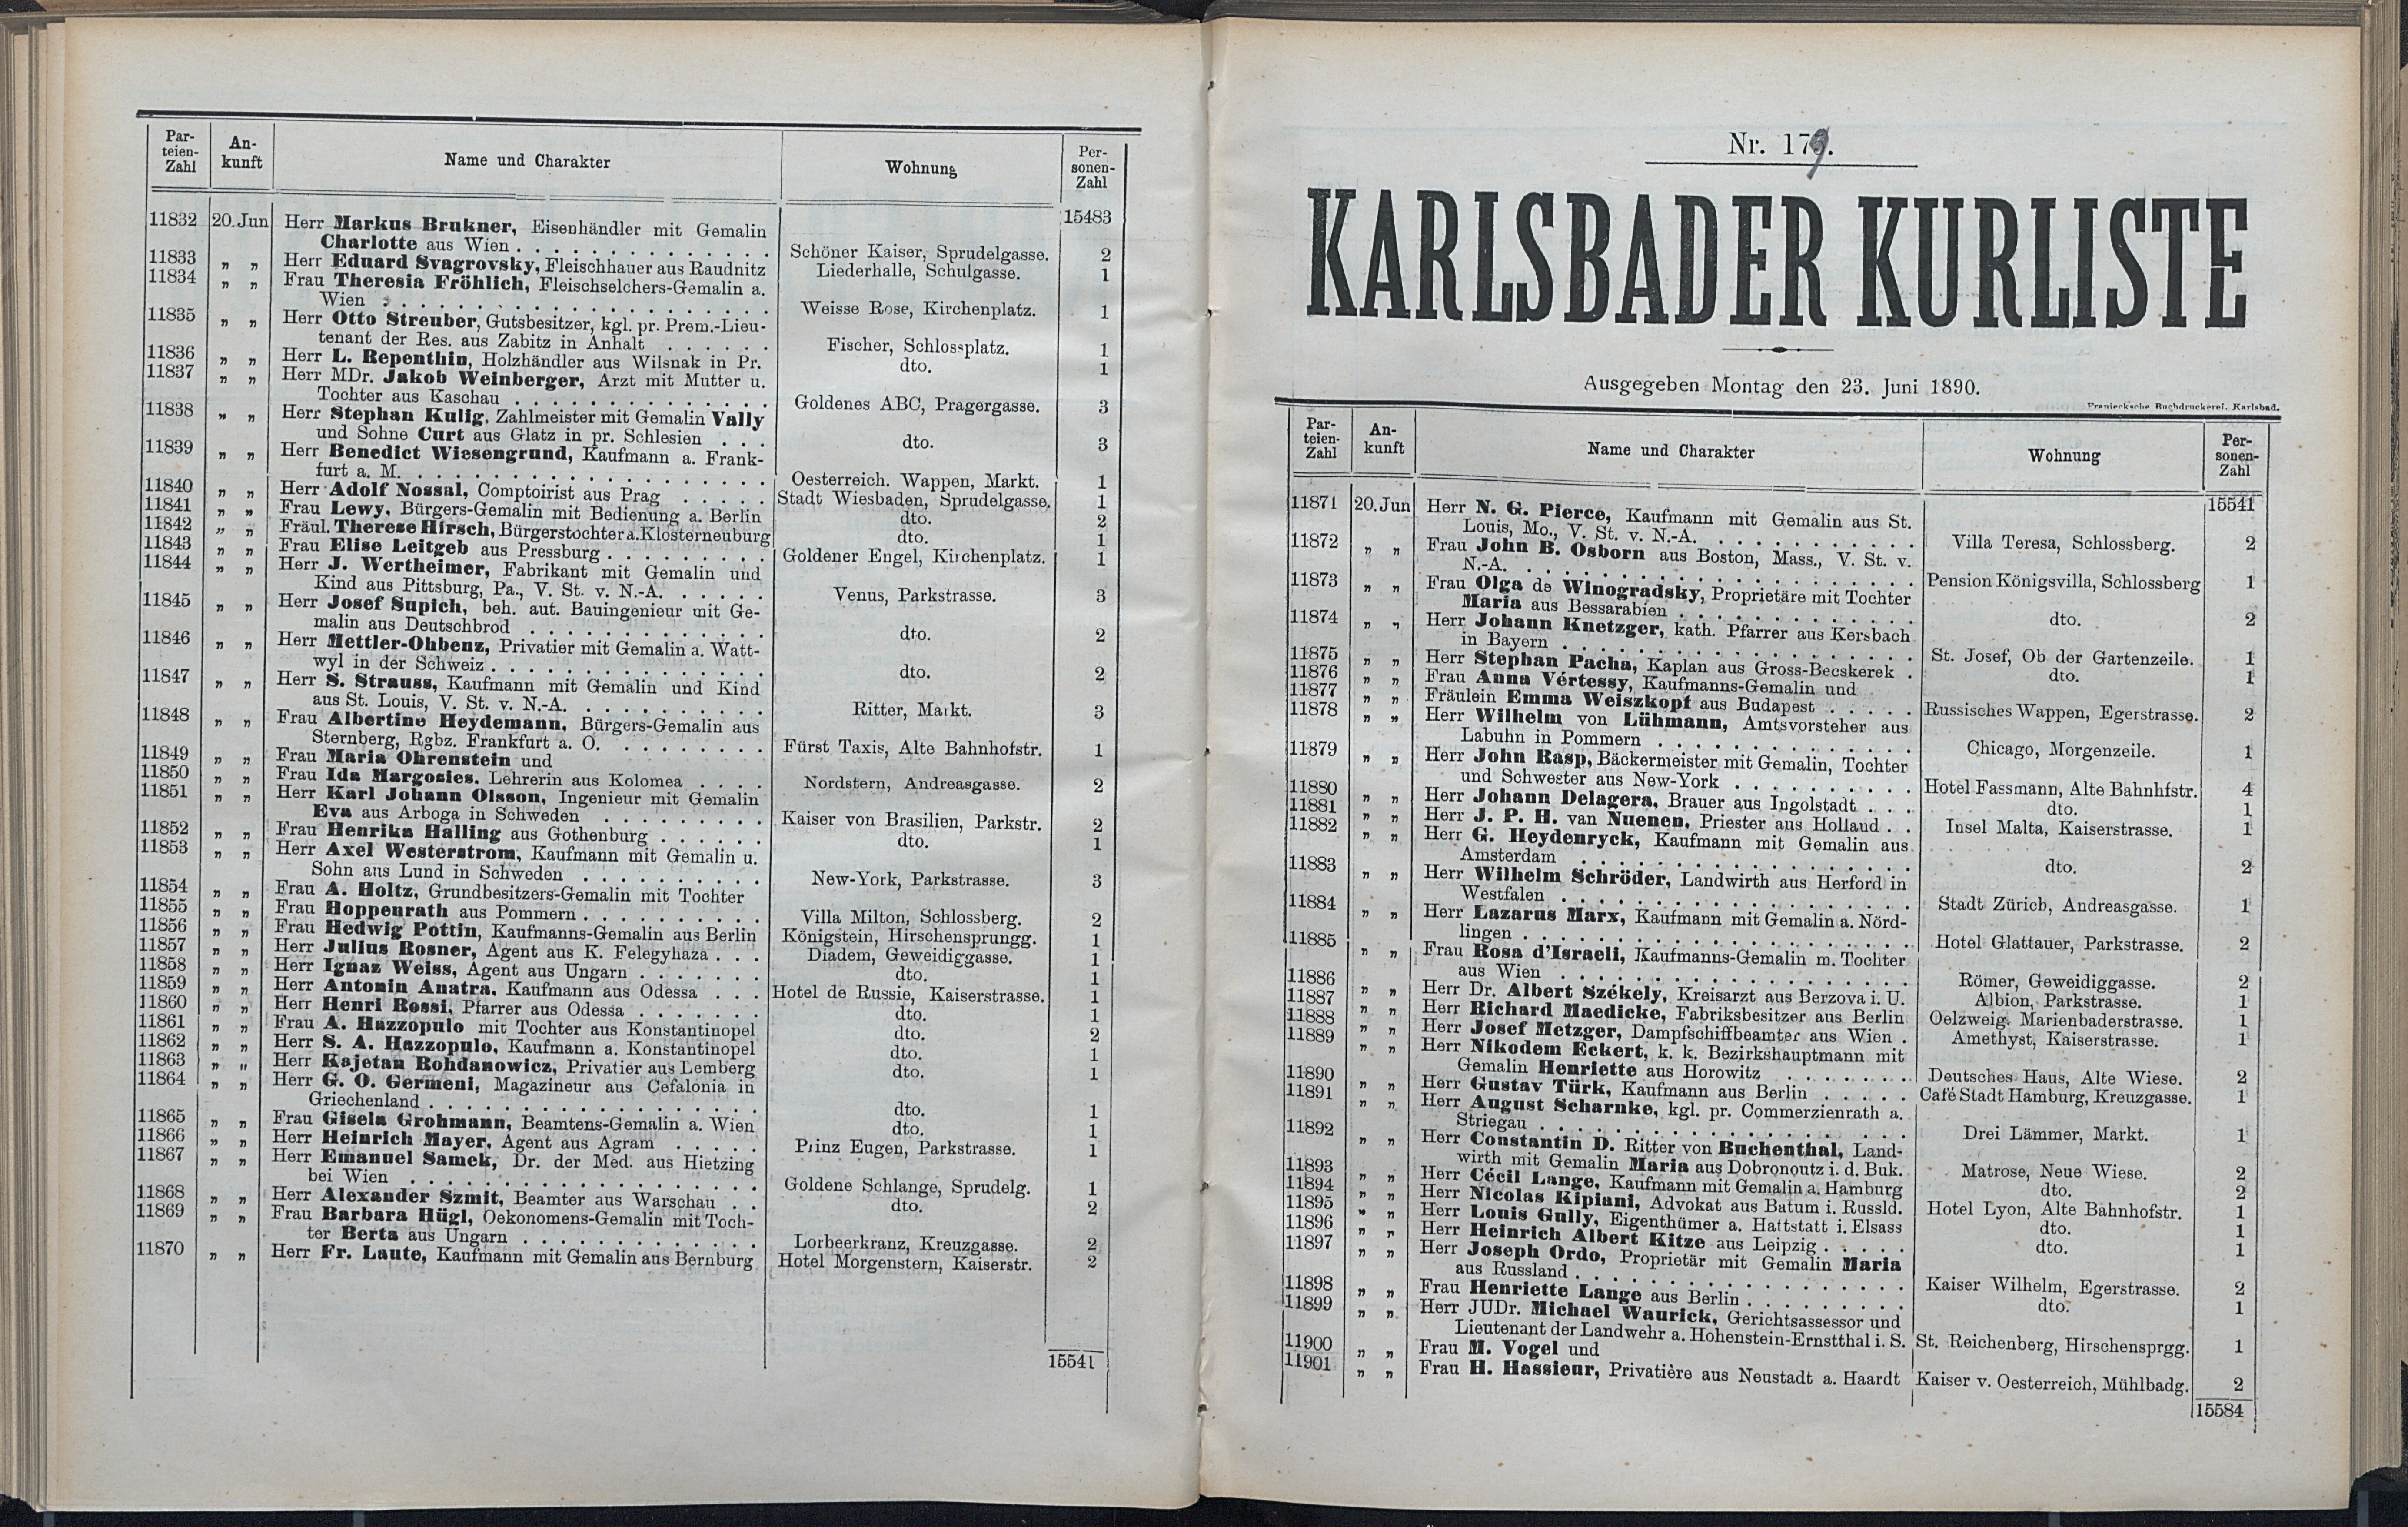 198. soap-kv_knihovna_karlsbader-kurliste-1890_1990